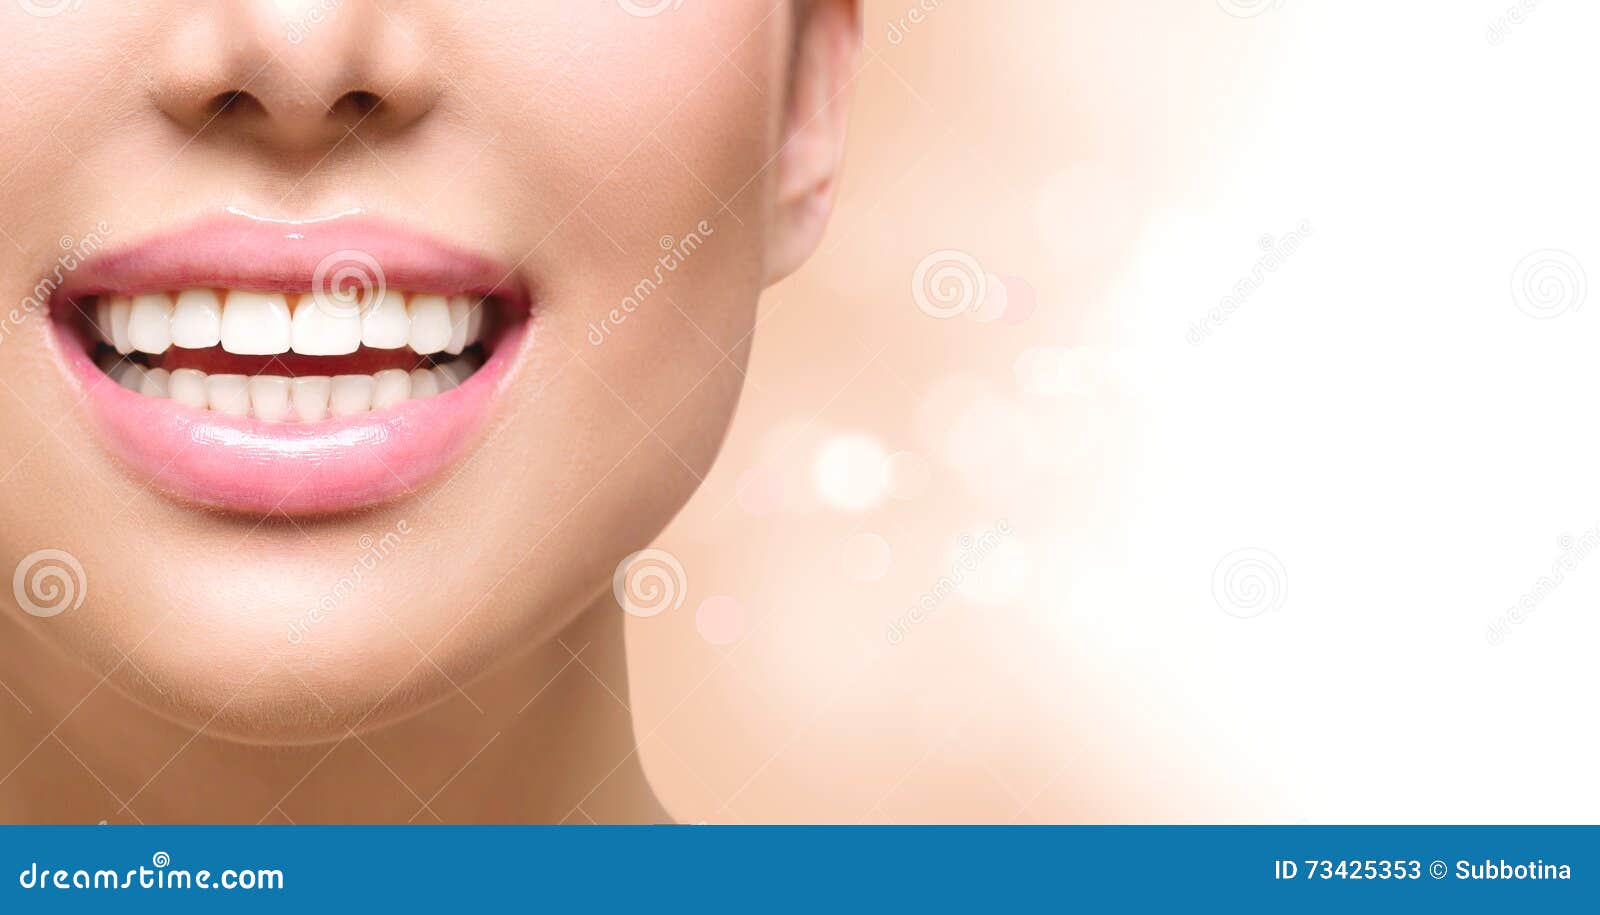 healthy smile. teeth whitening. dental care